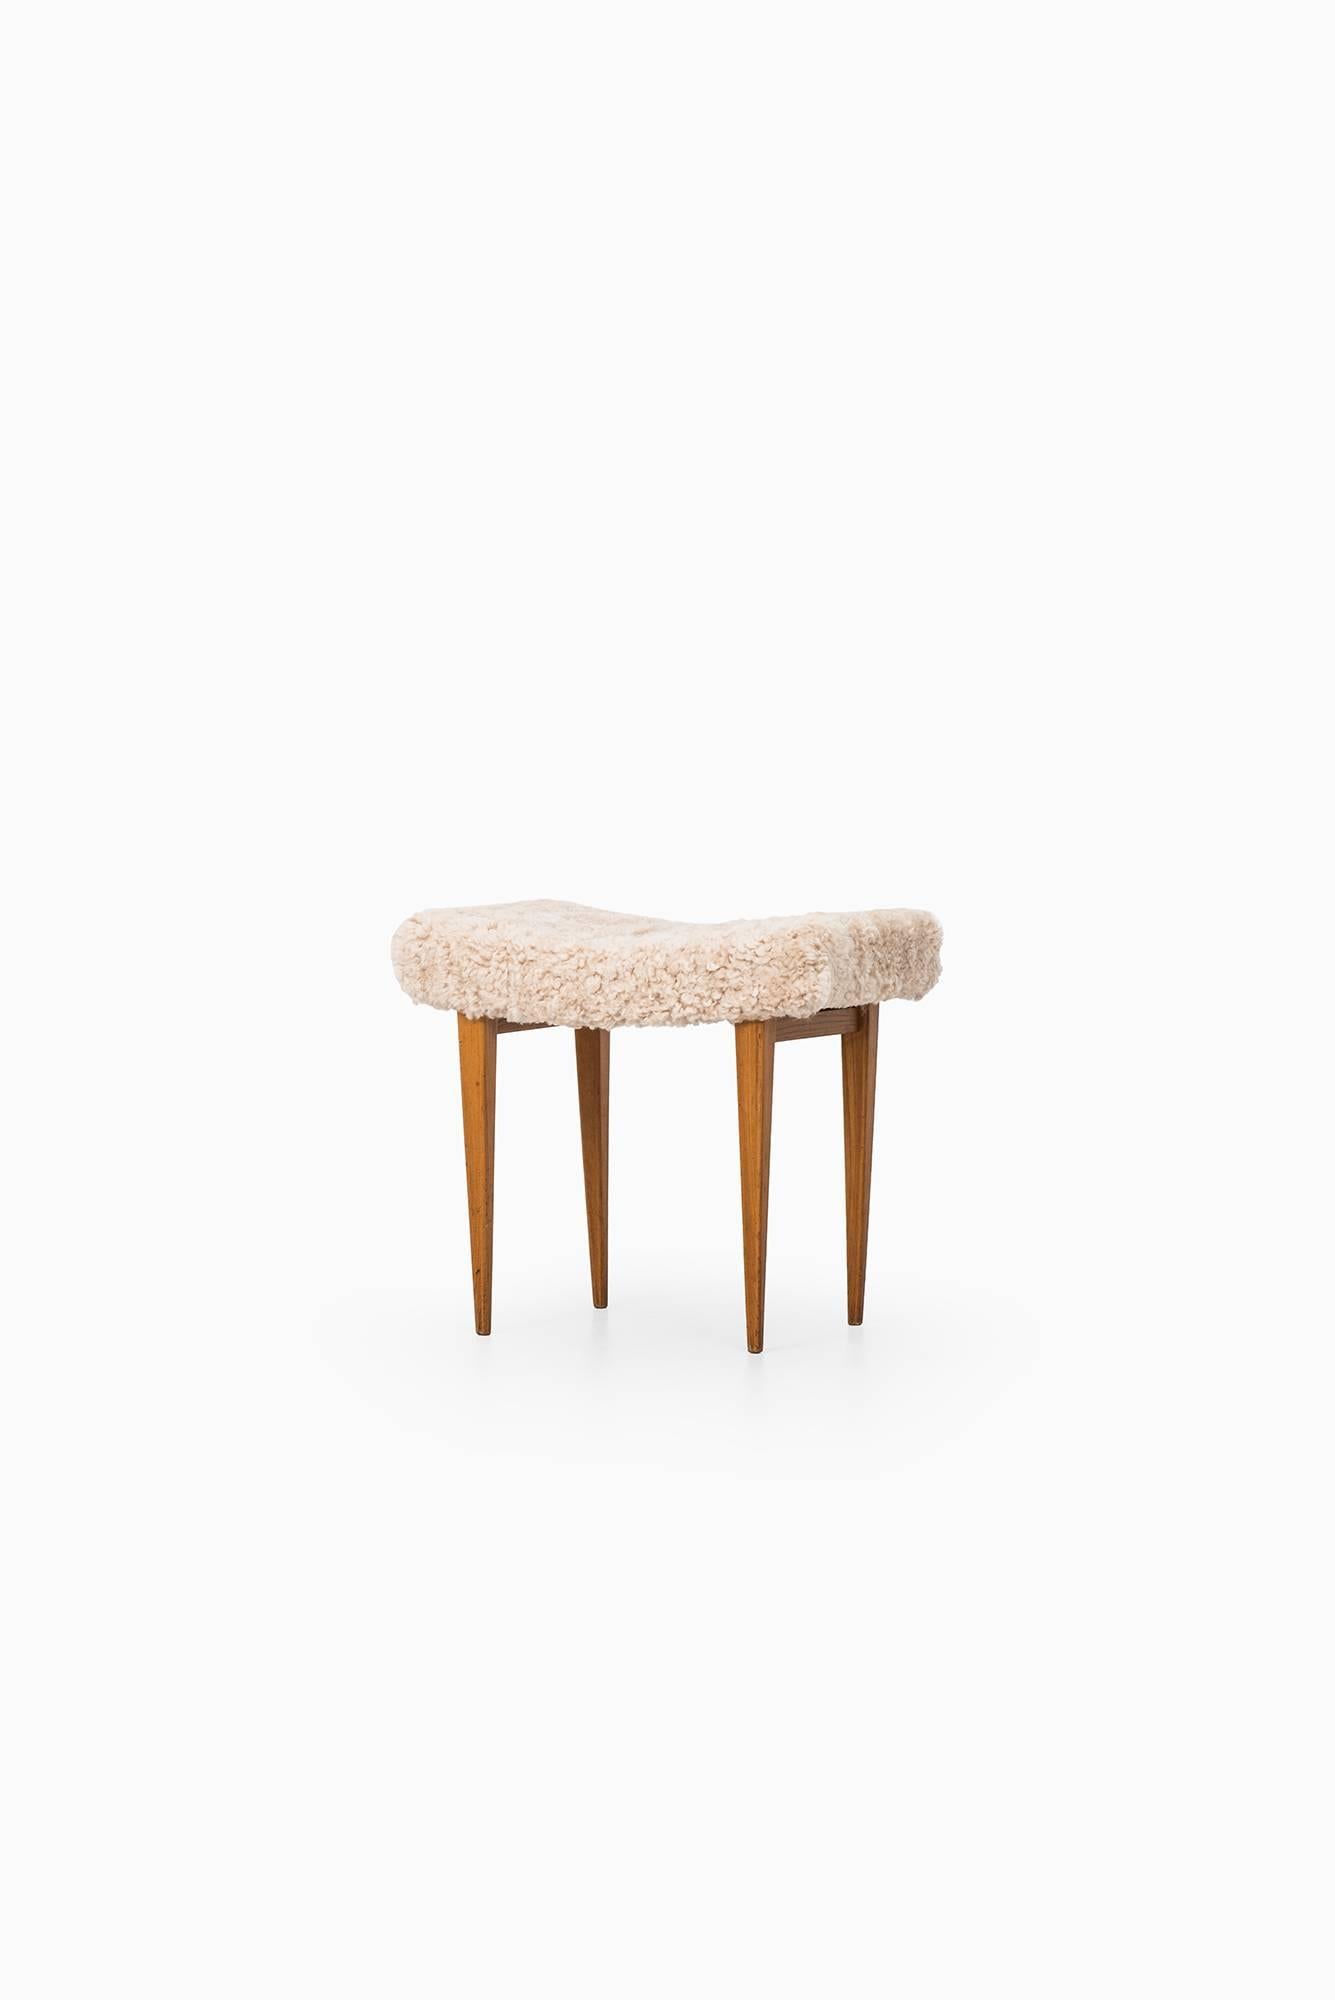 Rare stool designed by Bruno Mathsson. Produced by Karl Mathsson in Värnamo, Sweden.